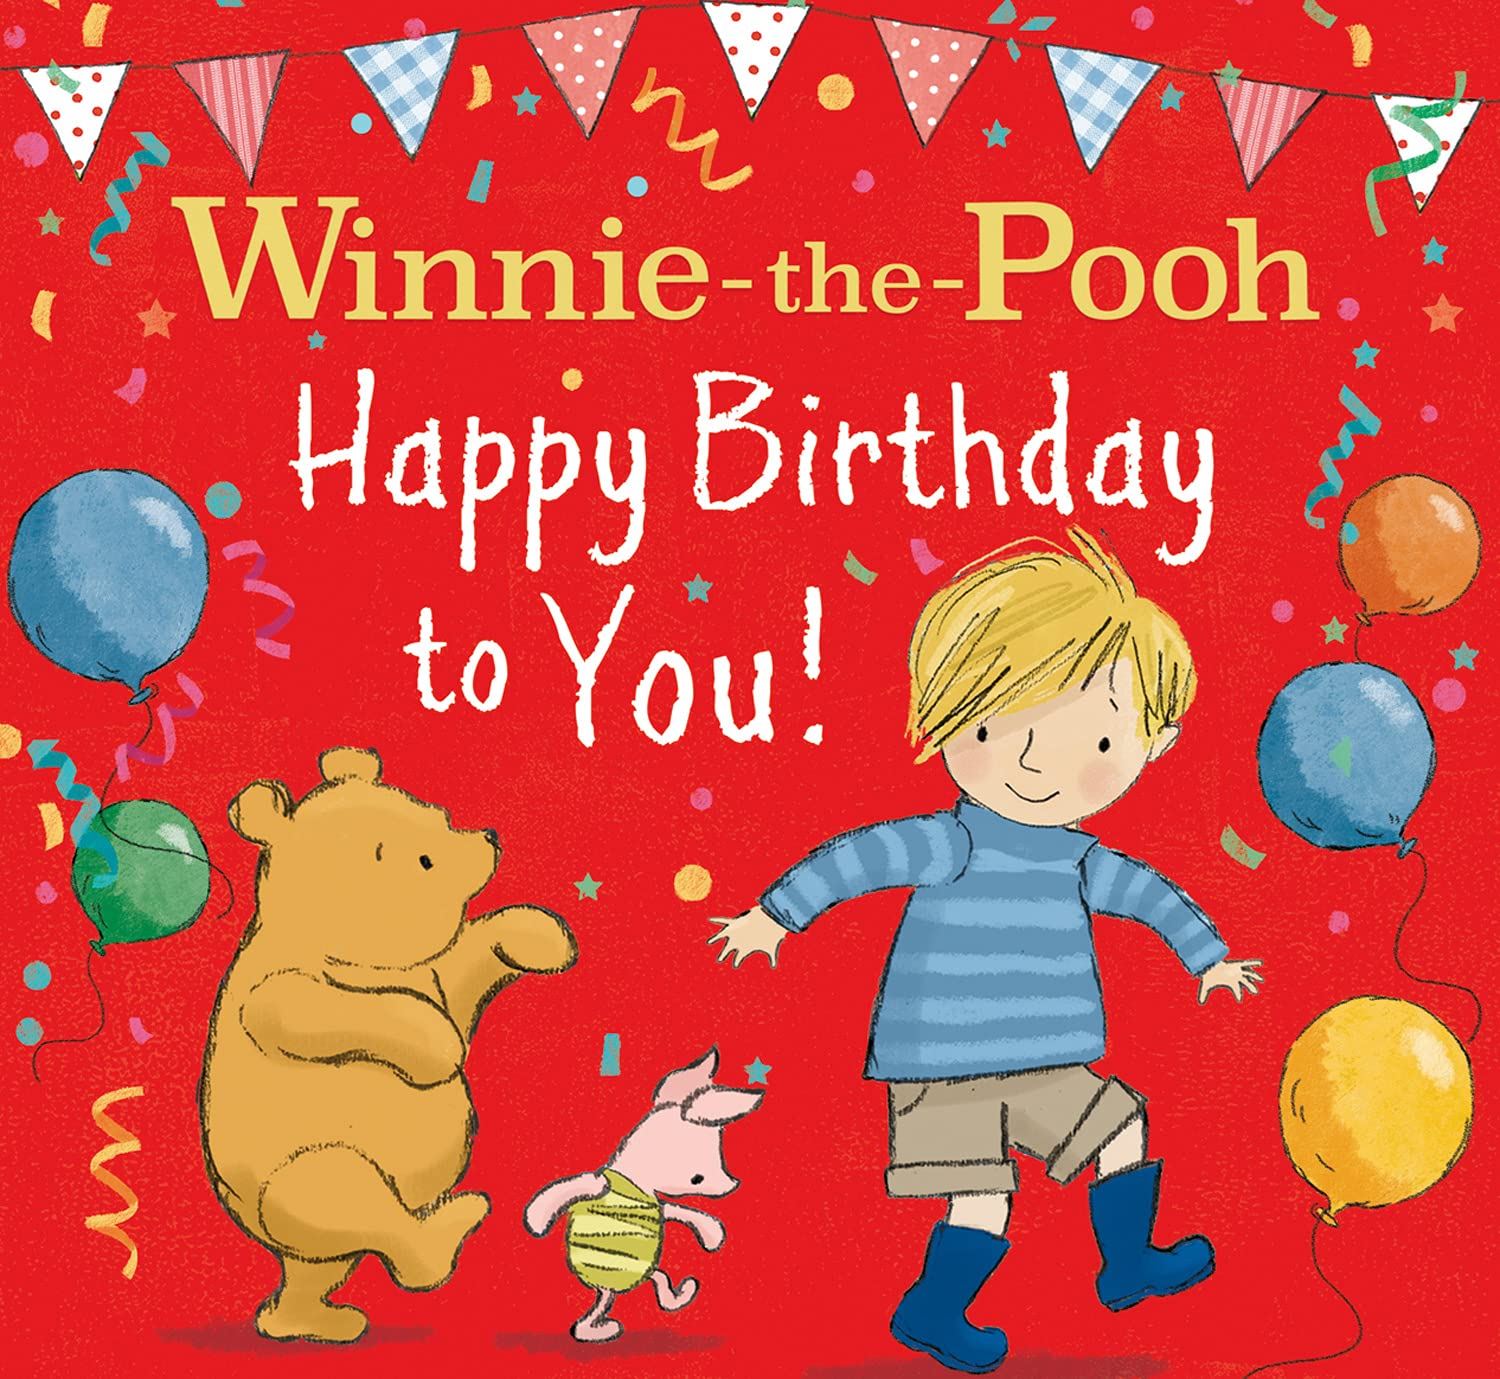 Winnie the Pooh Happy Birthday to You